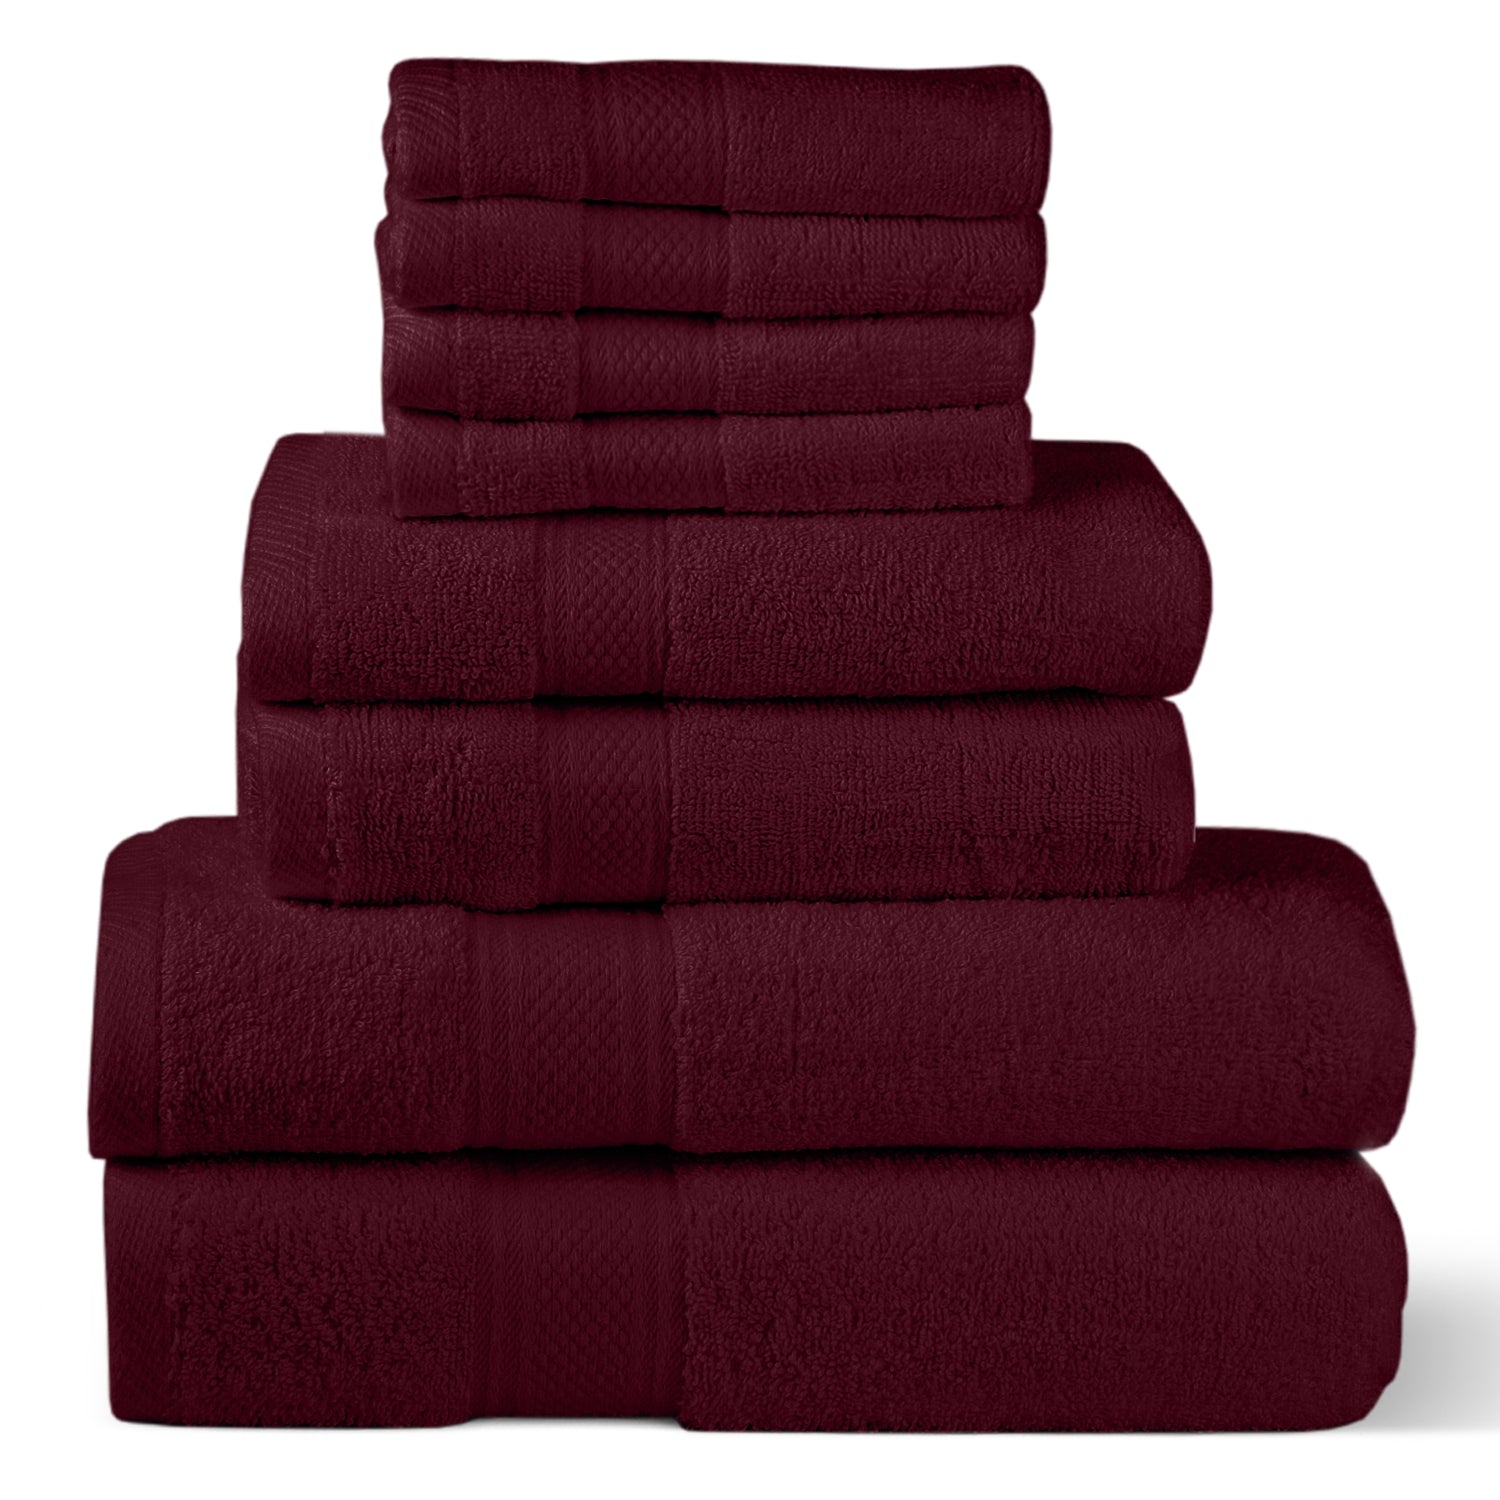 Burgundy Bath Towels Set (Pack of 8)